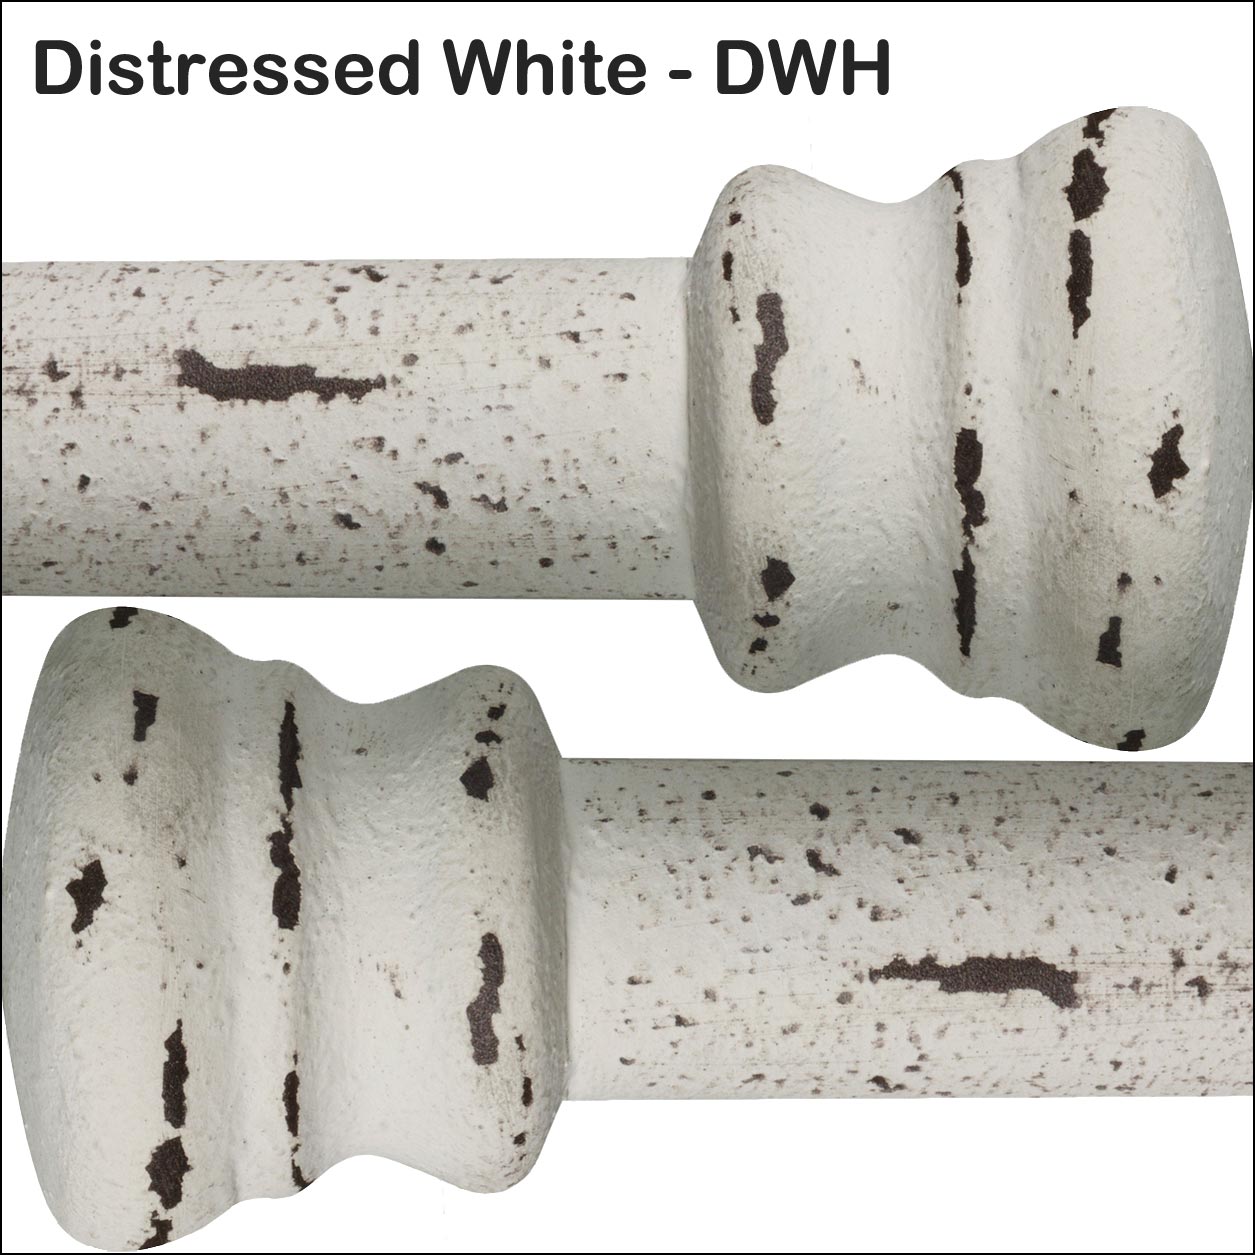 Distressed White DWH Powder Coating Finish Wesley Allen Matriae